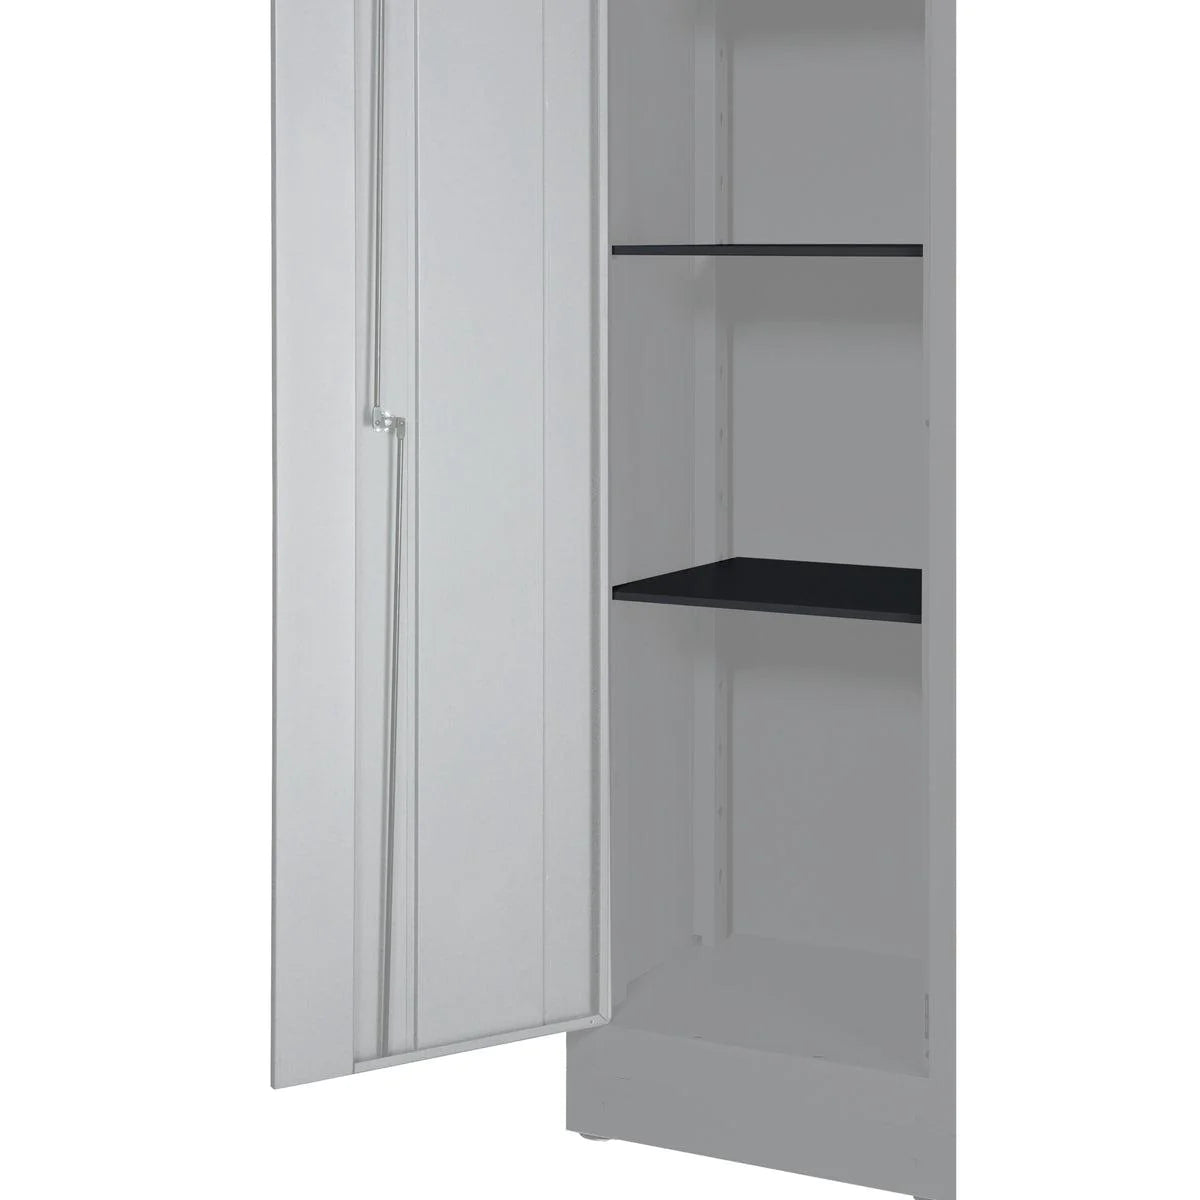 2 Shelves for 24" Tall Cabinet MST240001DG2 (2-Piece), Dark Grey